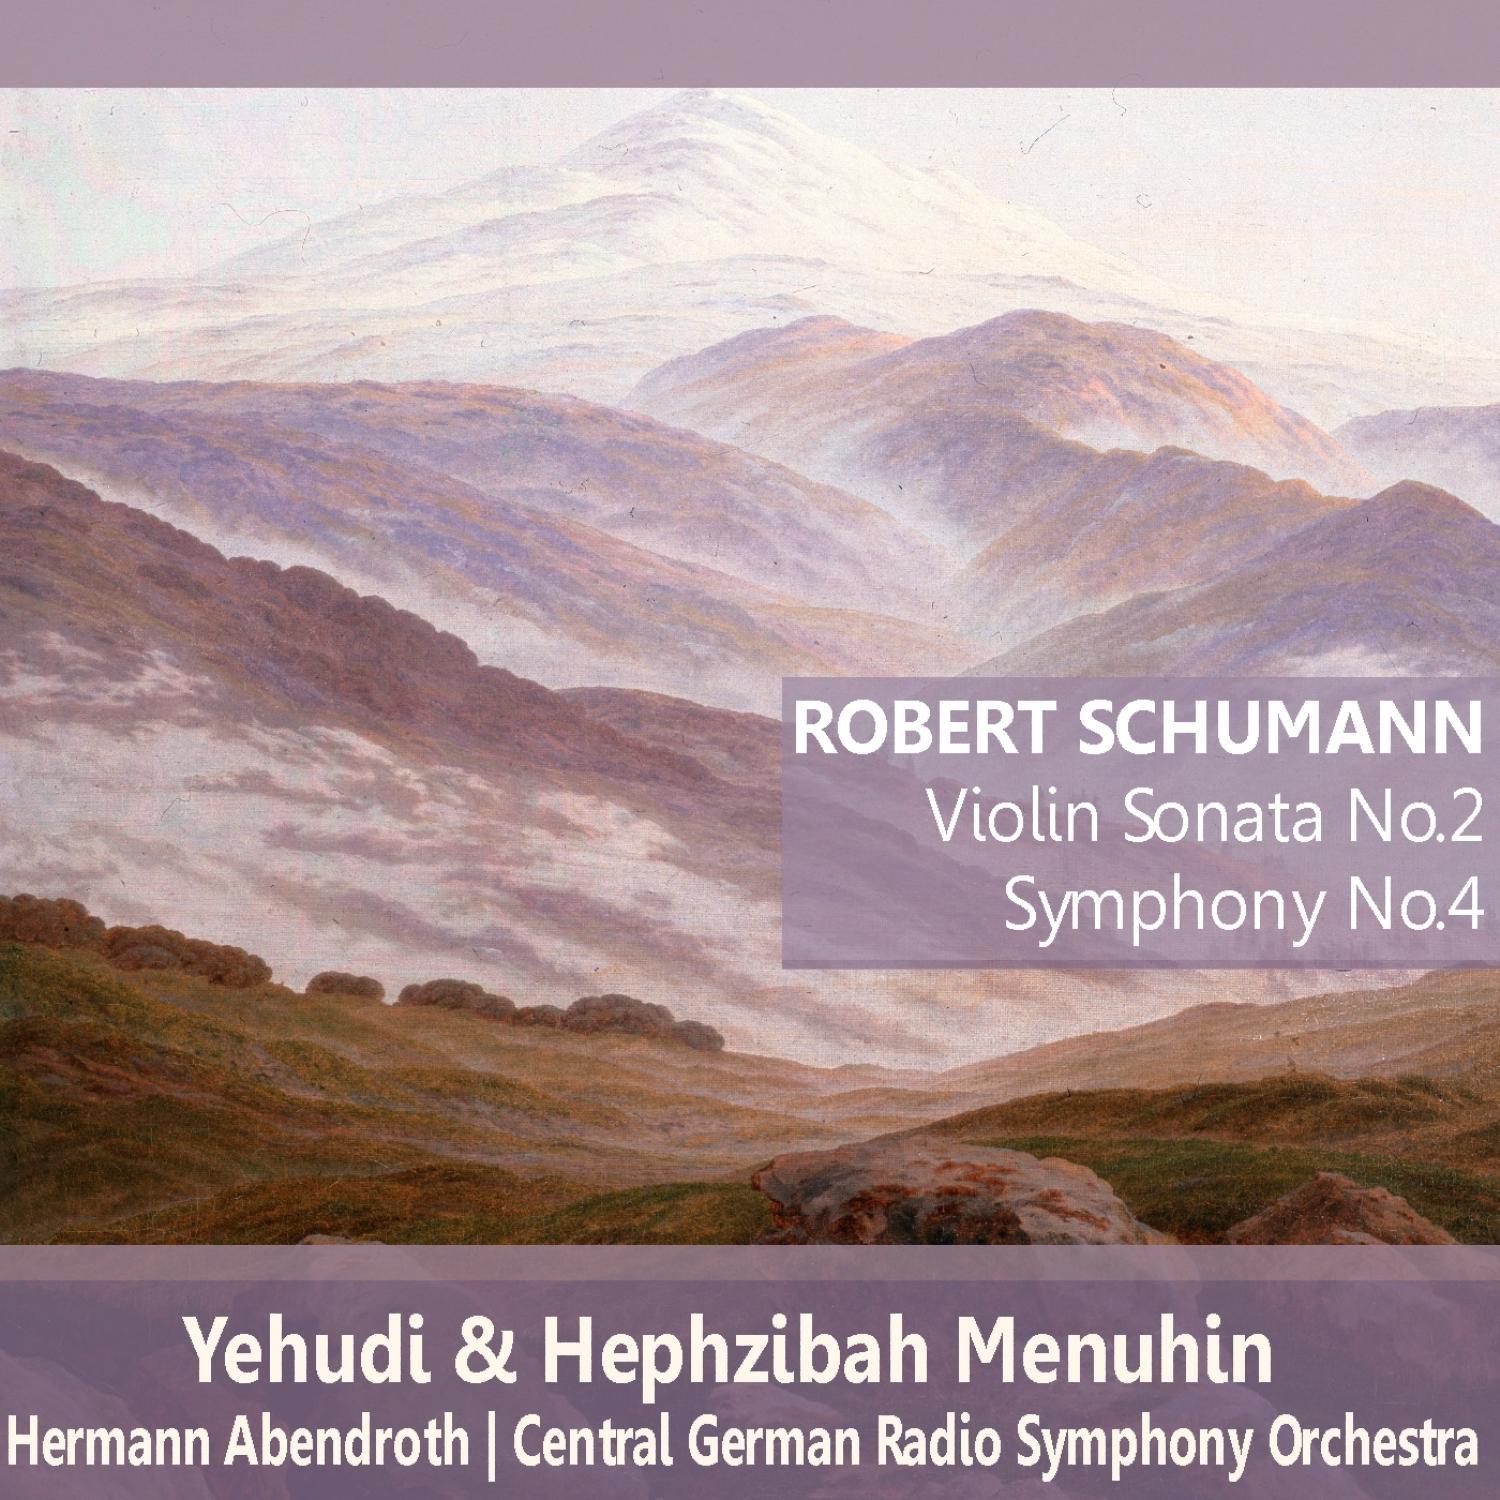 Schumann: Violin Sonata No. 2, Symphony No. 4